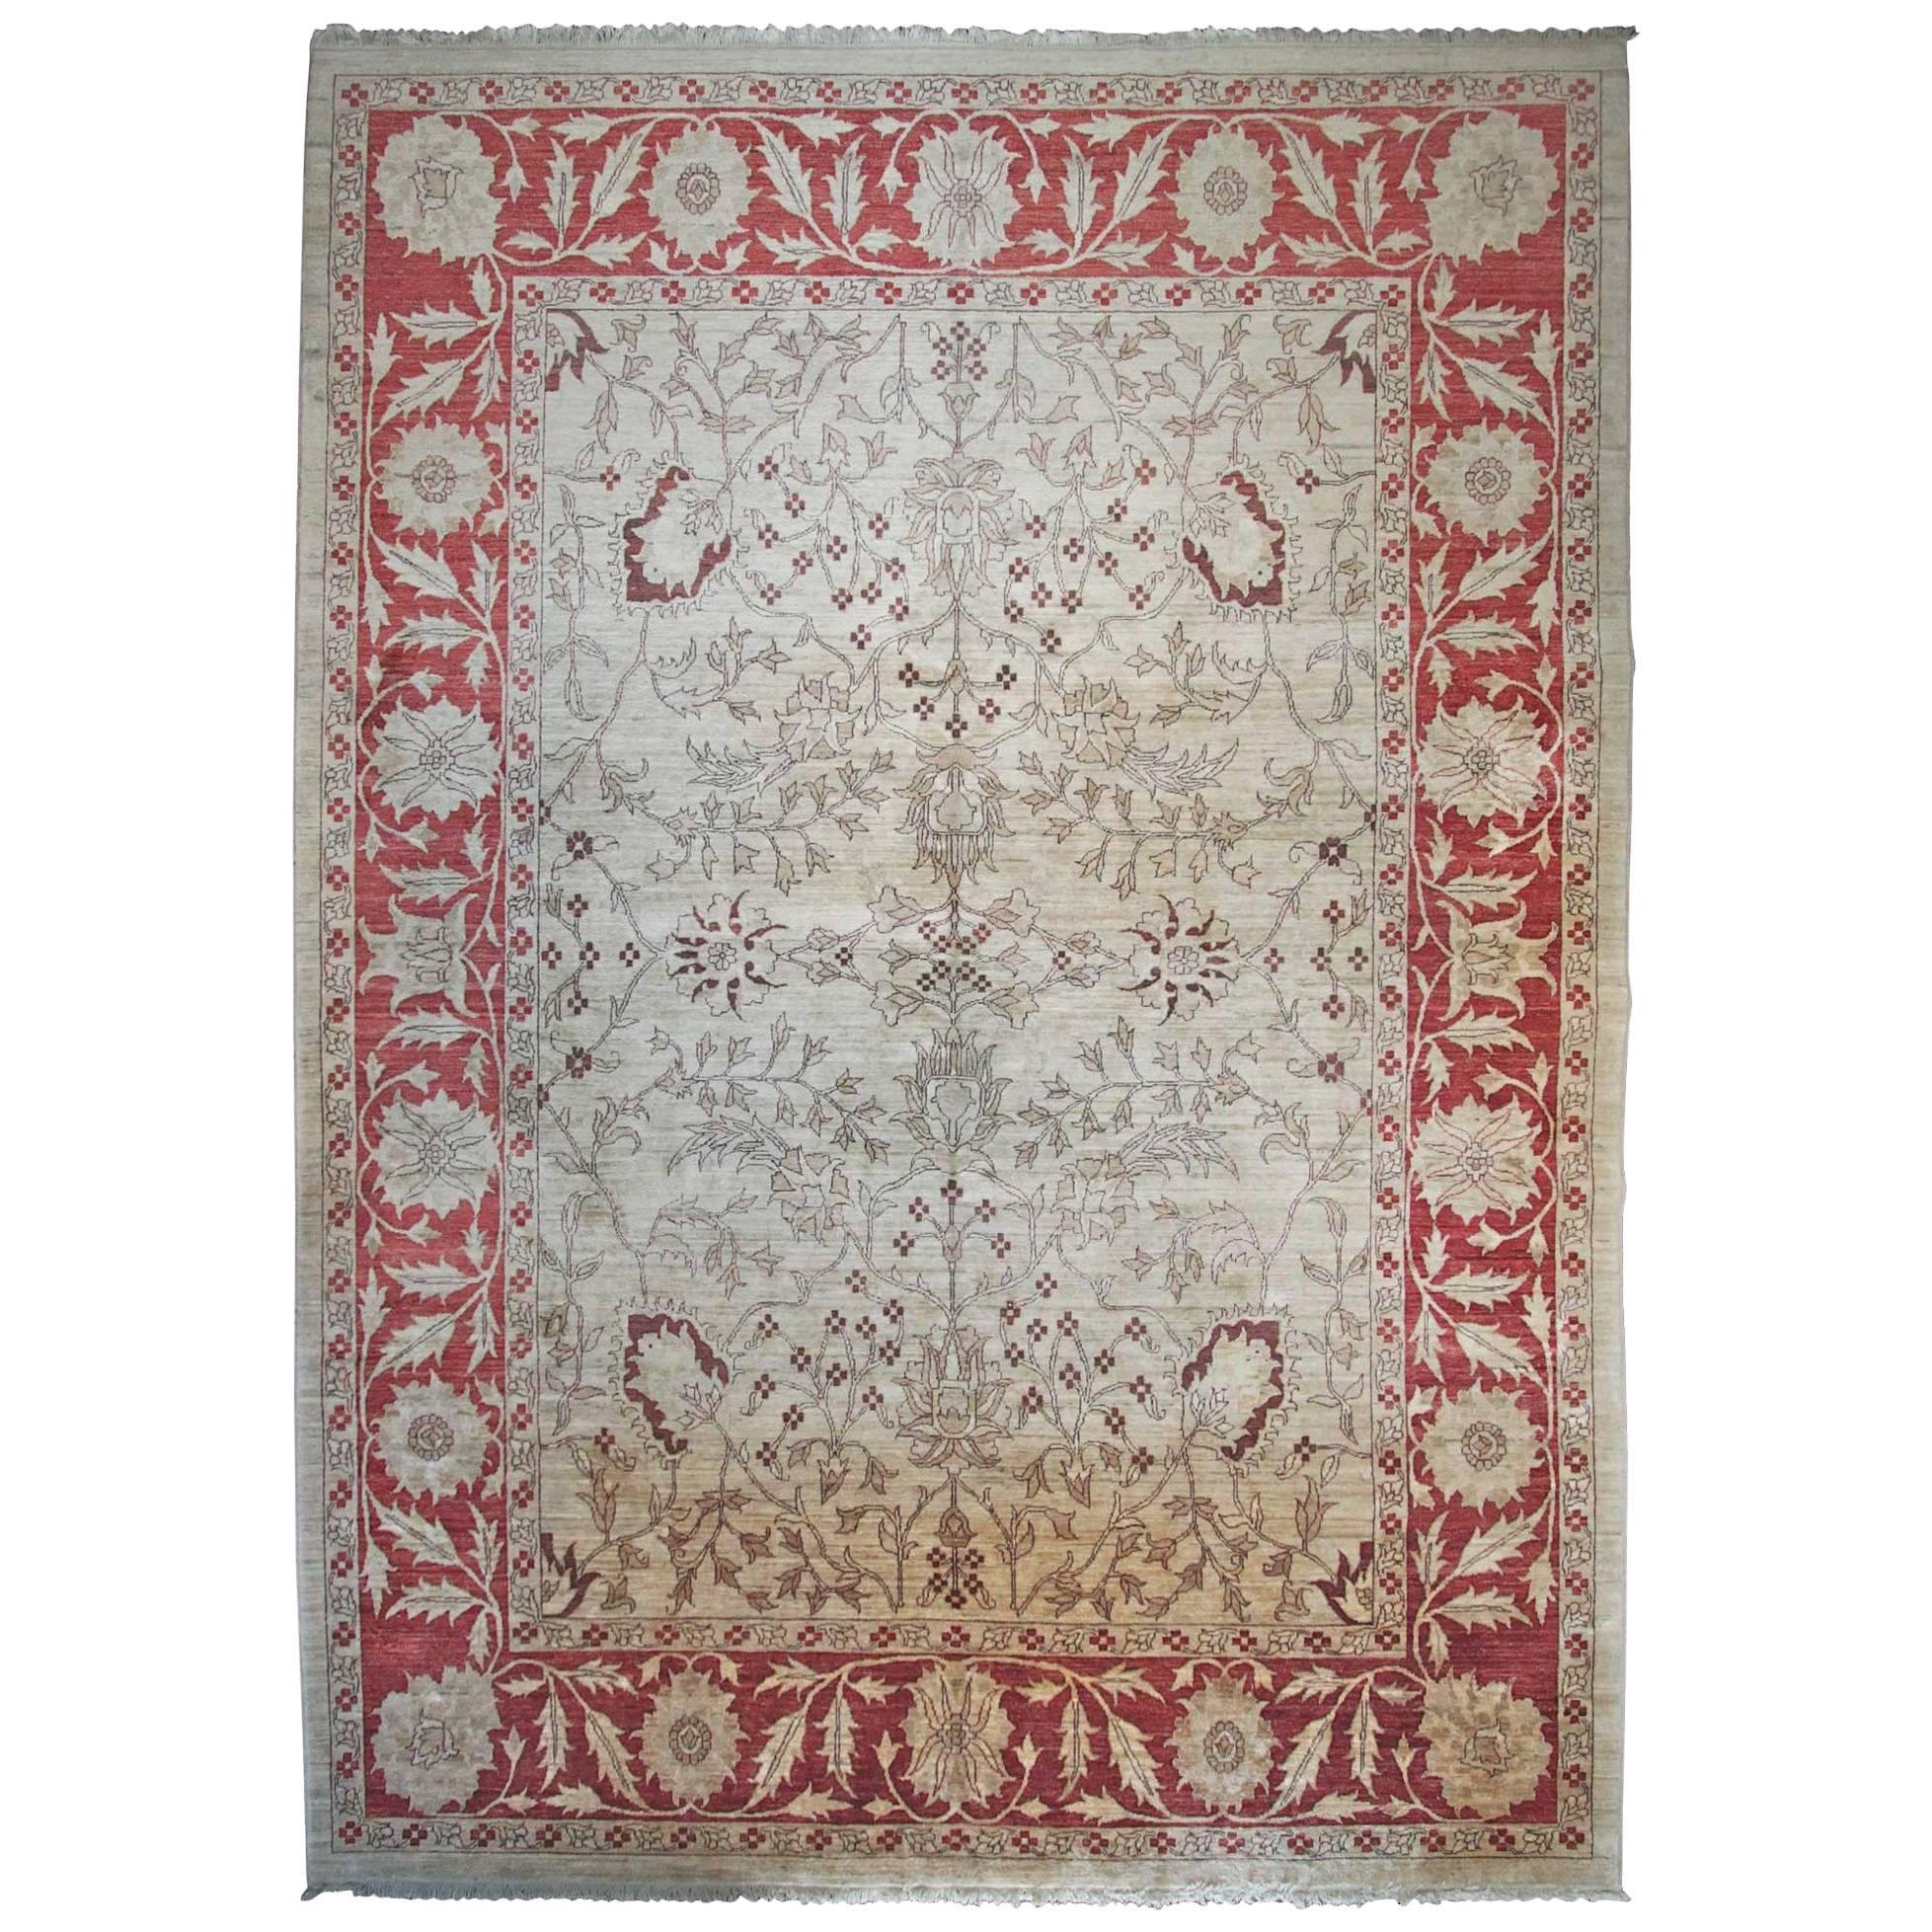 Agra Carpet, Afghanistan